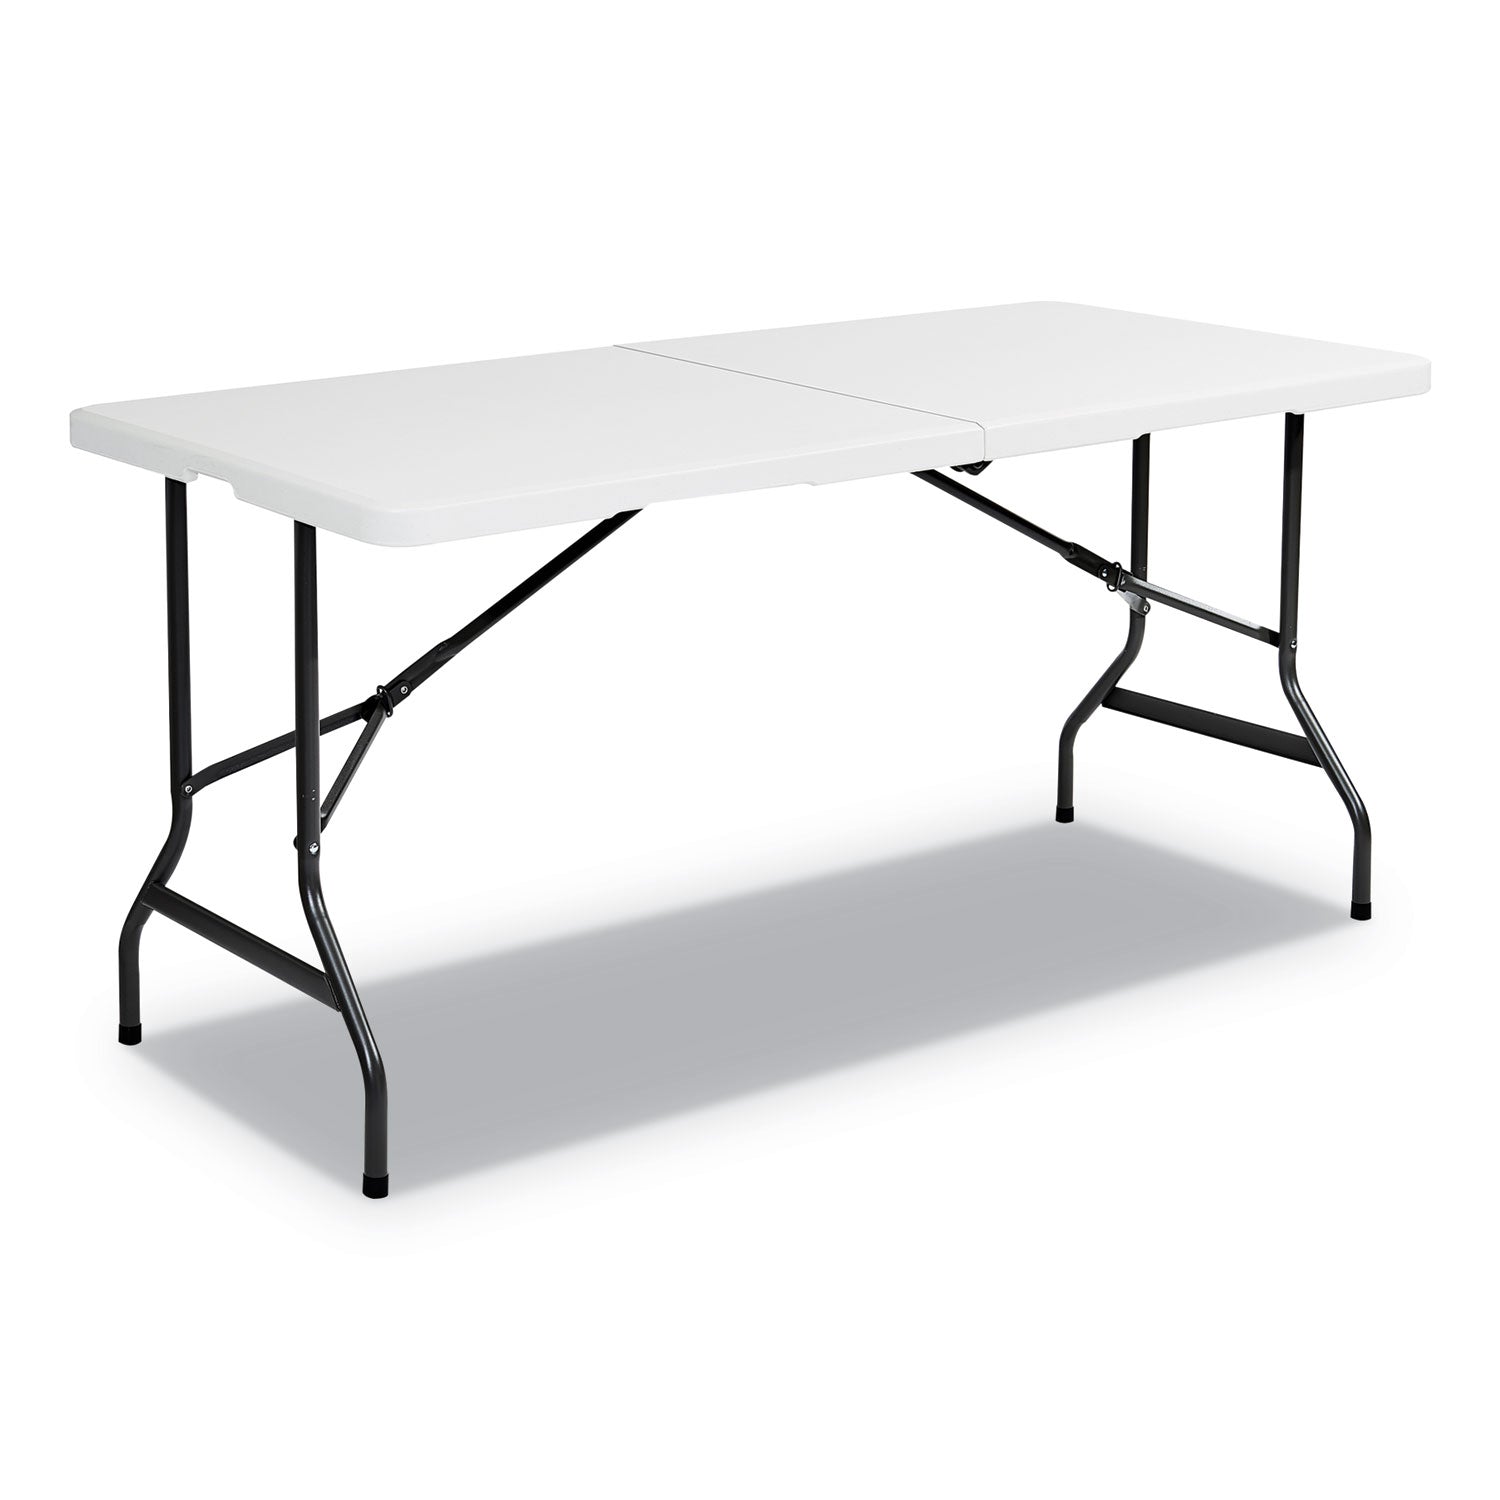 IndestrucTable Classic Bi-Folding Table, Rectangular, 60" x 30" x 29", Platinum - 1